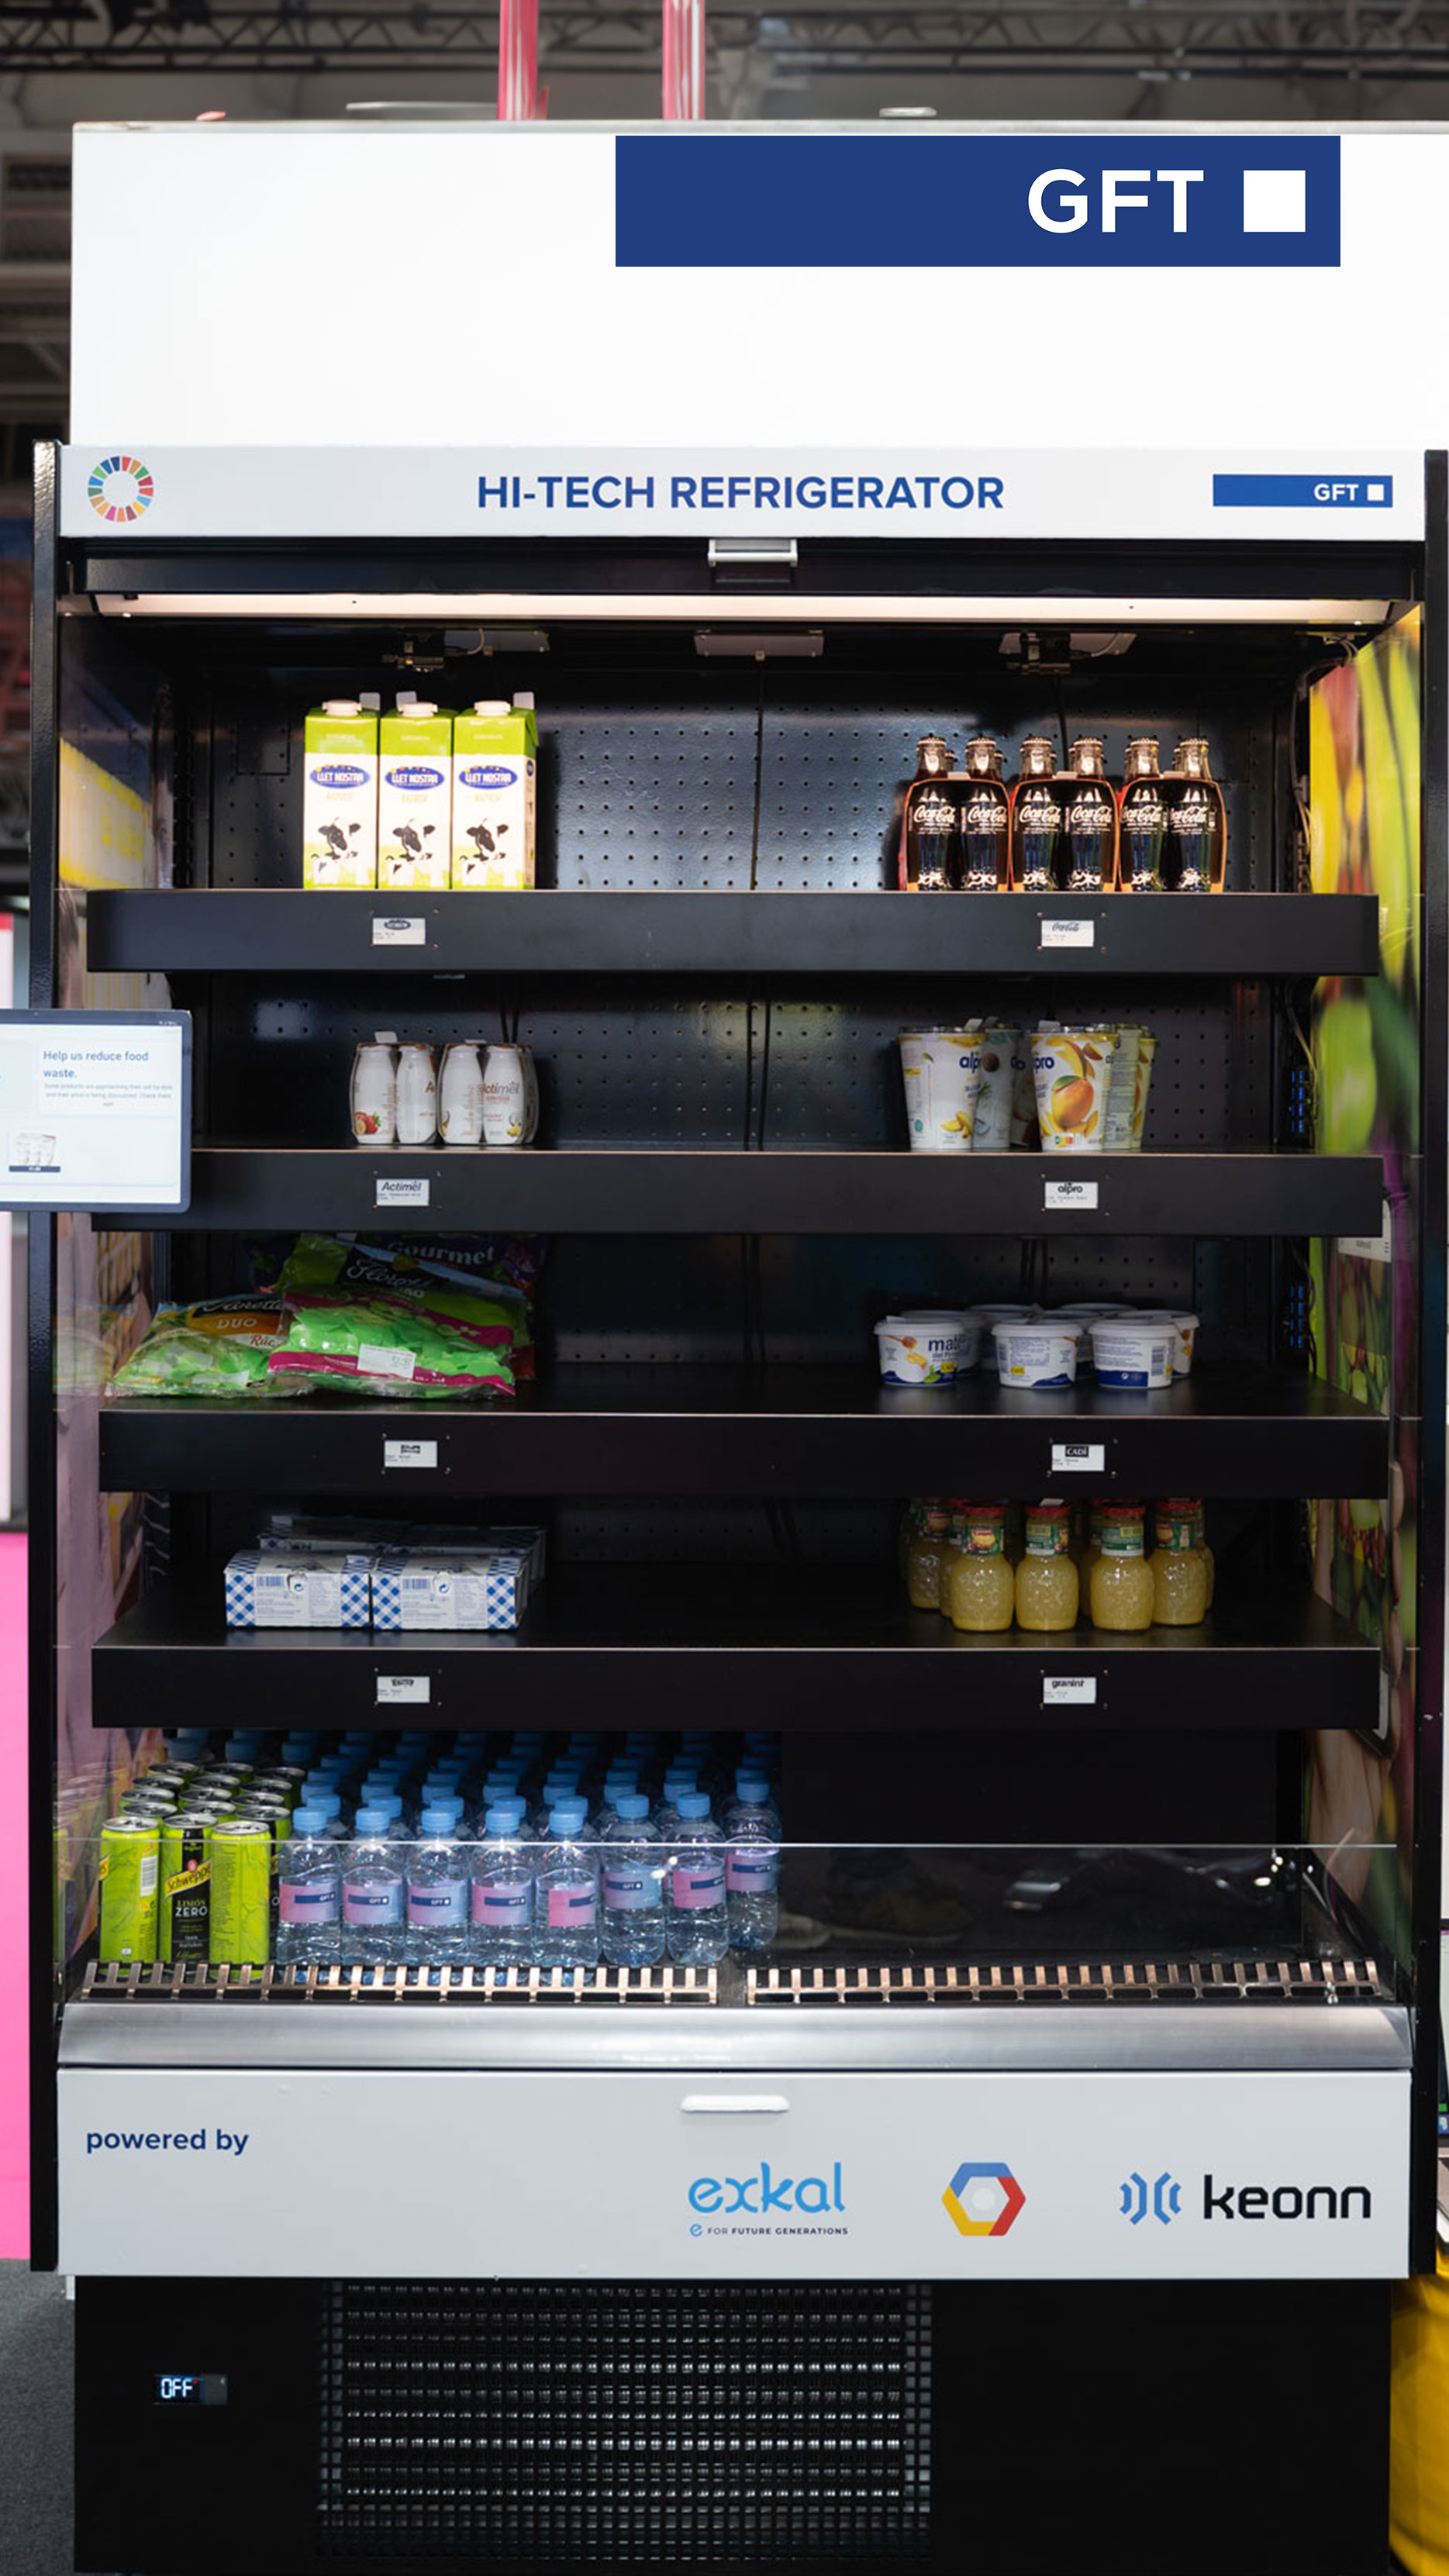 High-tech supermarket refrigerator